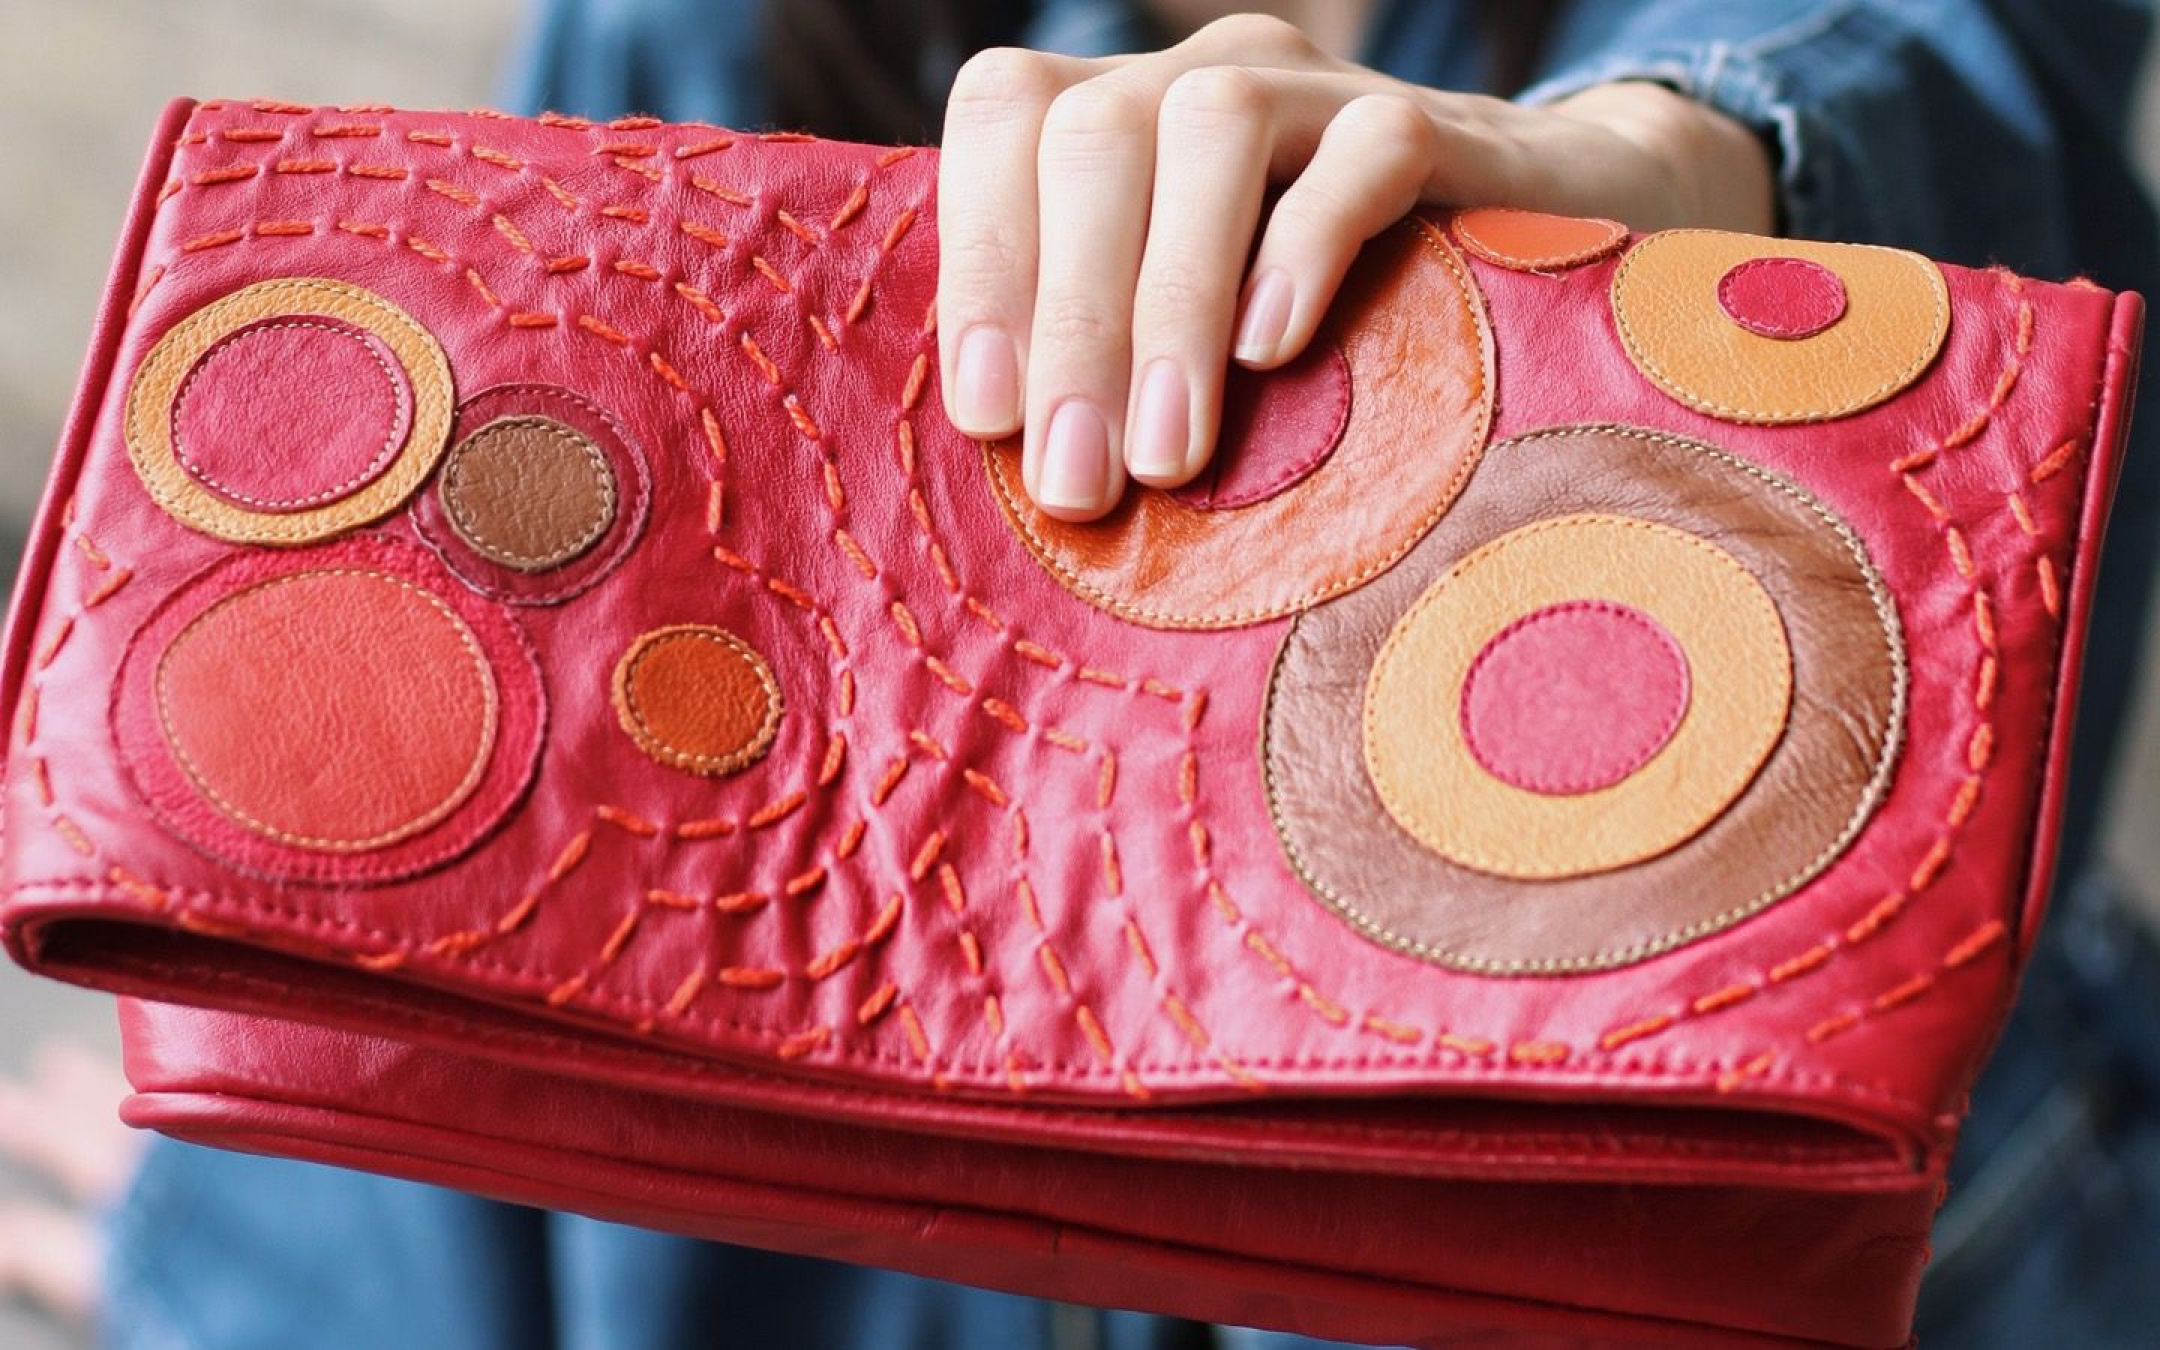 Handmade Bags In Natural Fabrics: Over 60 Easy-To-Make Purses, Totes and  More: Takahashi, Emiko: 9780804849029: Amazon.com: Books